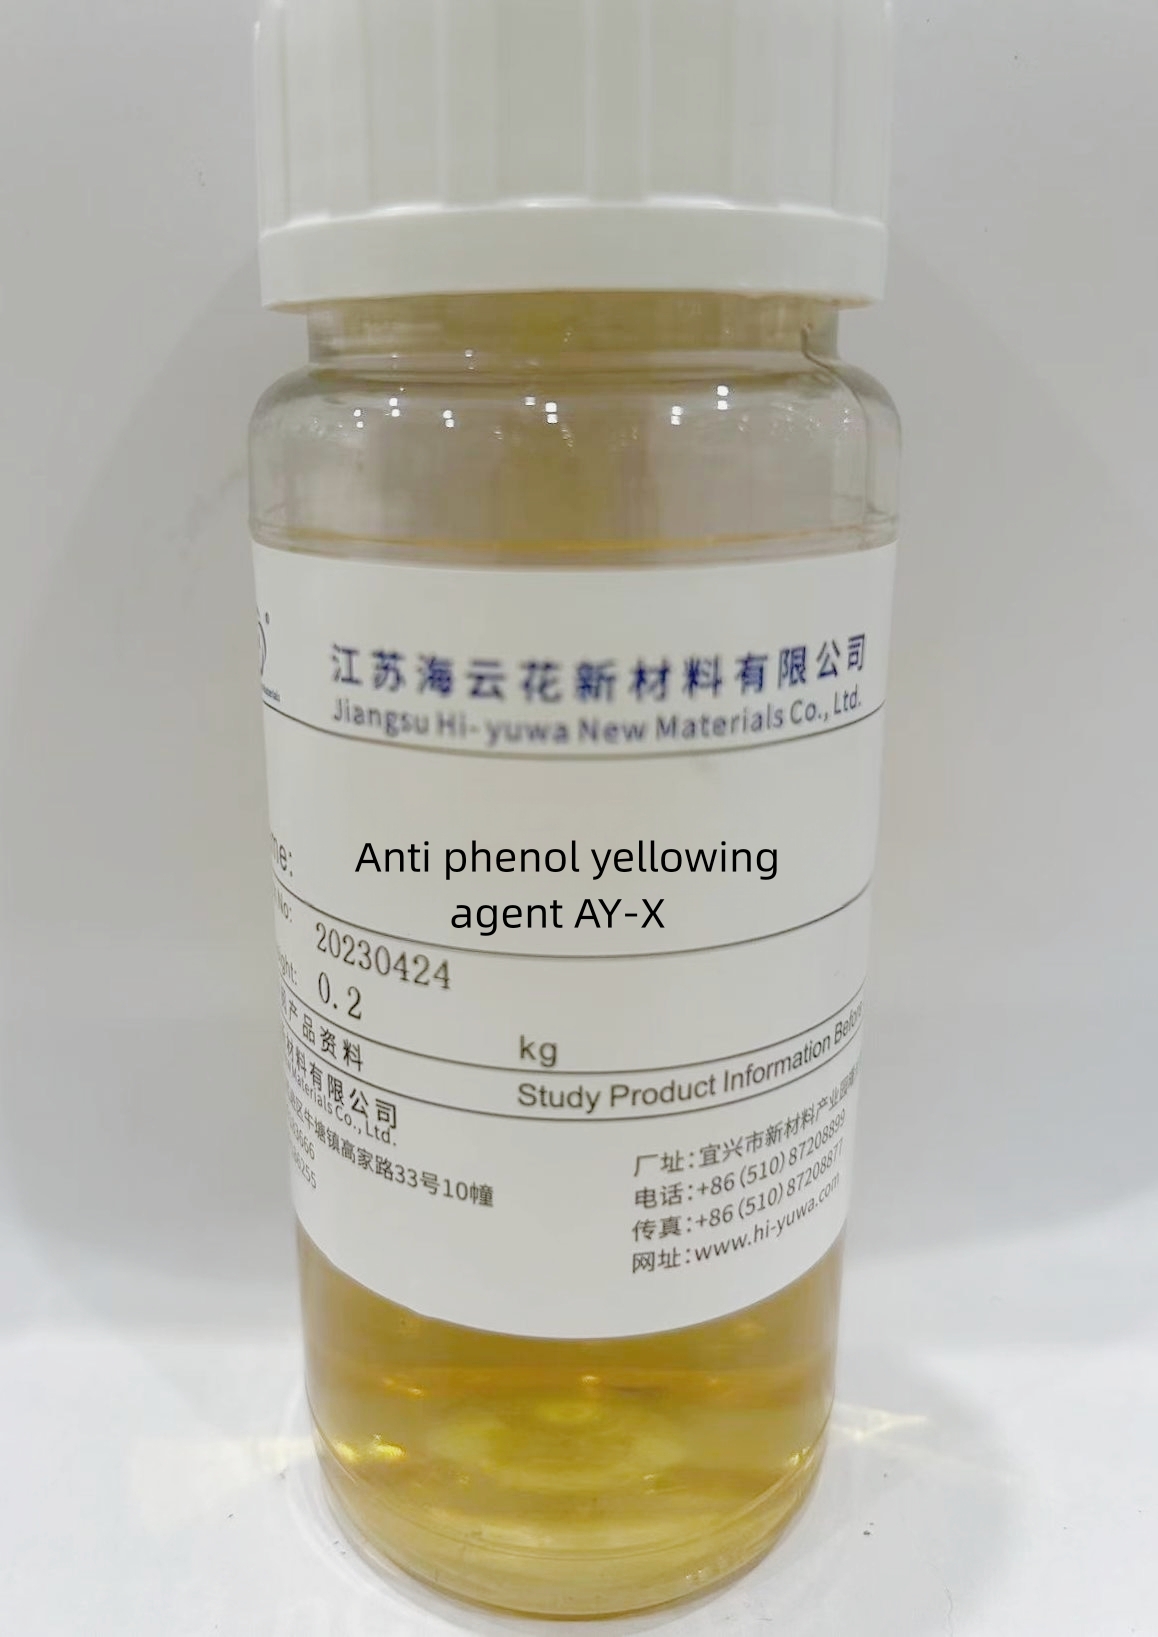 Anti phenol yellowing agent AY-X